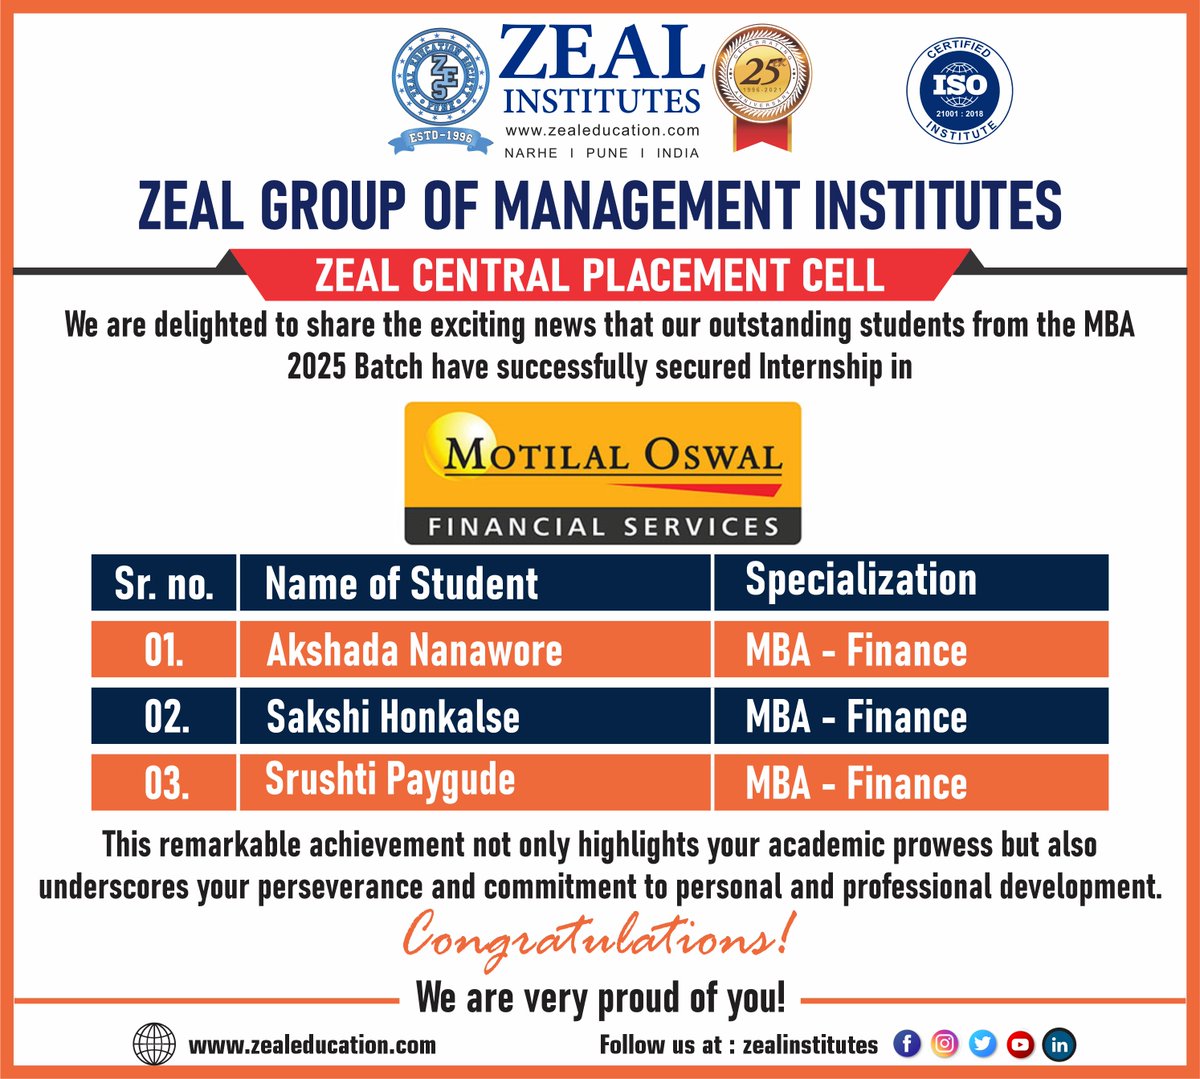 Congratulations💐💐
#ZealCentralPlacementCell#Placement#ZealEducationSociety#MBA Finance#MBA#BusinessAdministration#Management#StudentTrainingProgram